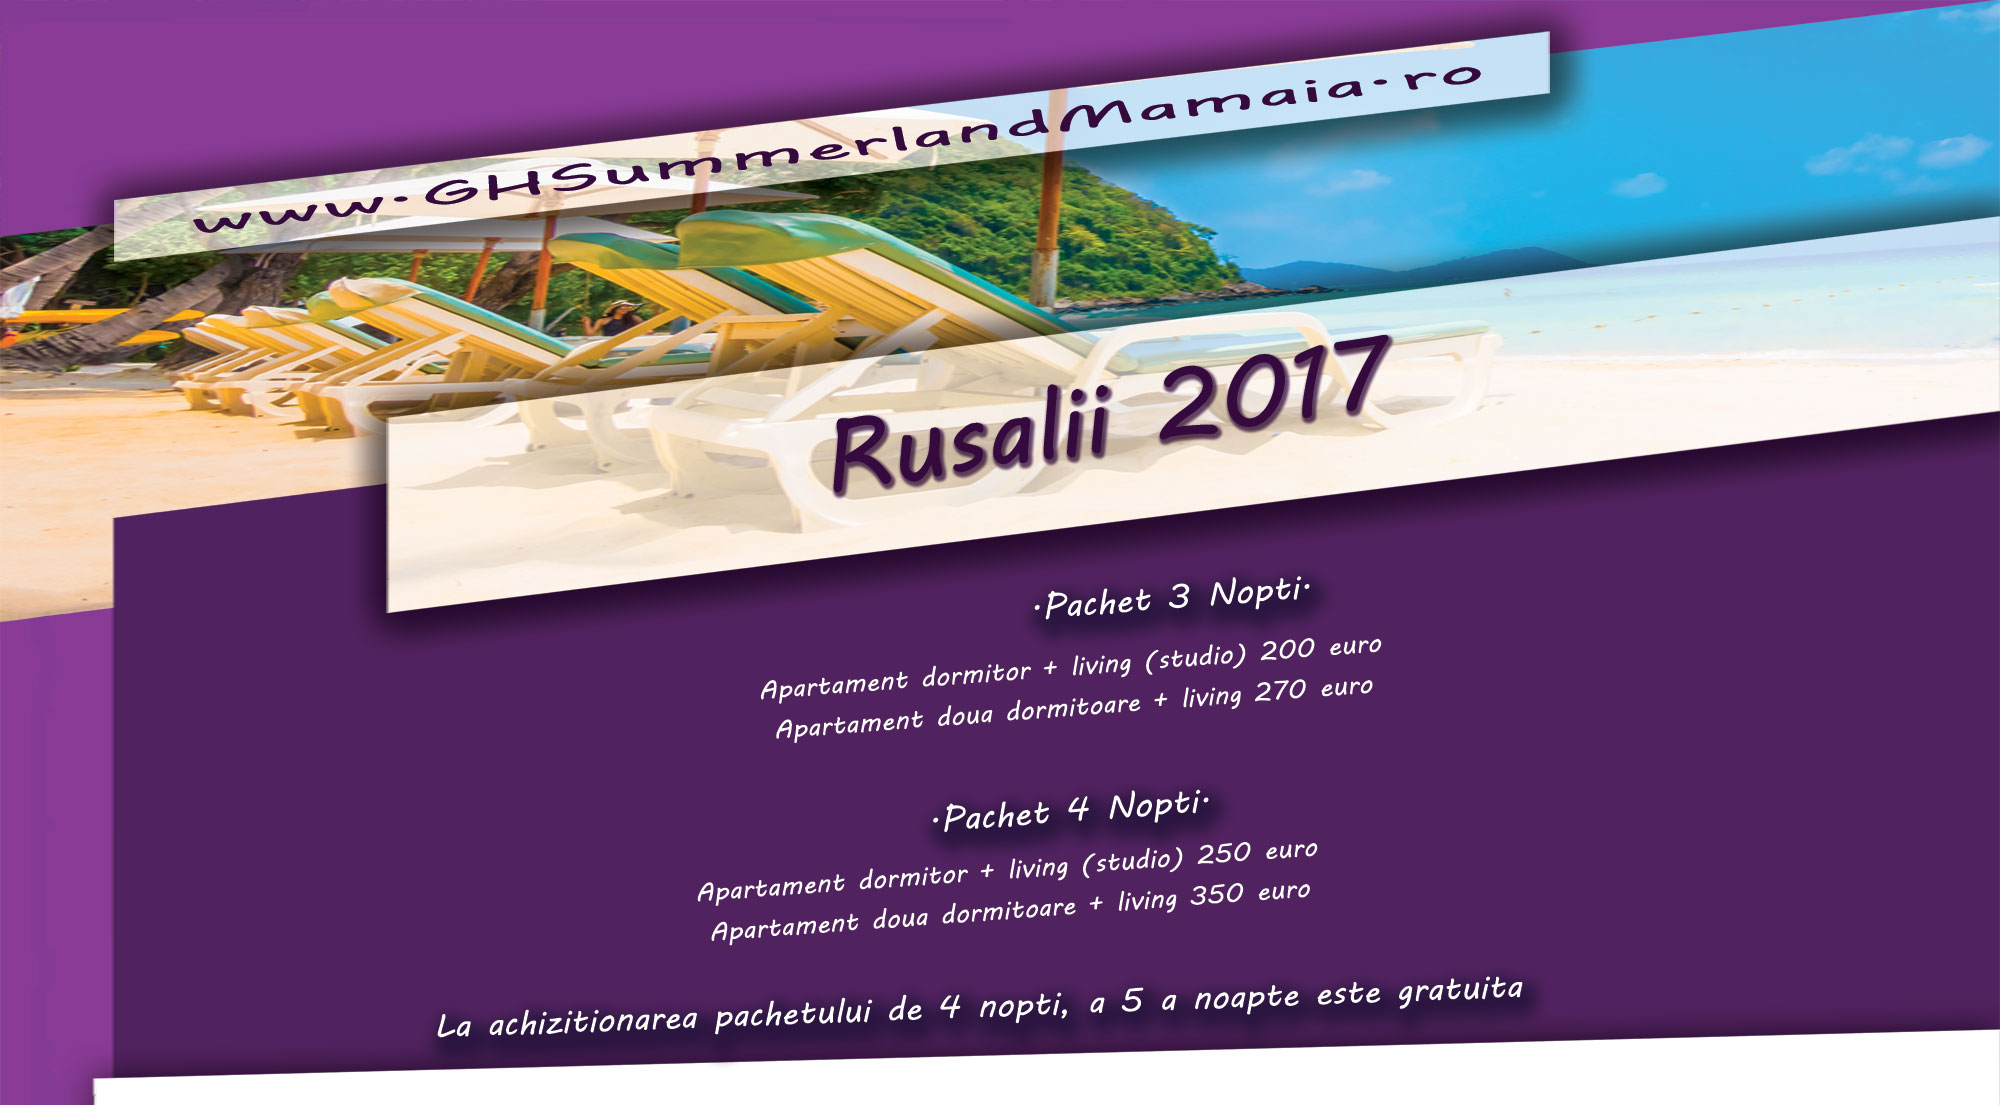 Oferta Rusalii 2017 Summerland Mamaia